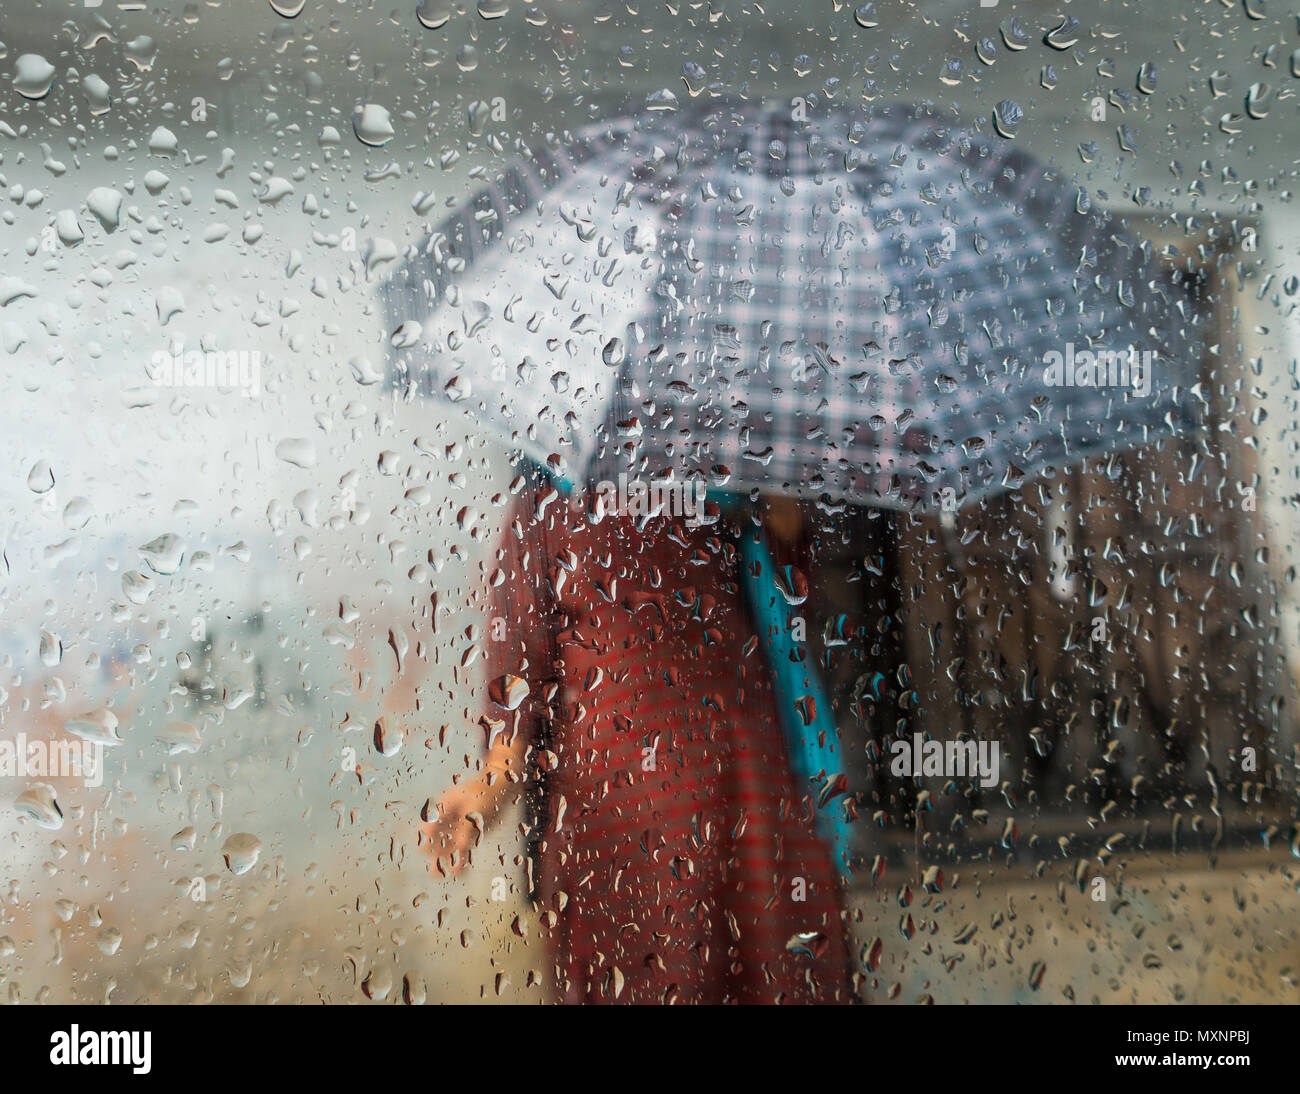 Monsoon season in Kathmandu, Nepal. Woman holding an umbrella seen through a window. Focus on droplets on glass. Stock Photo